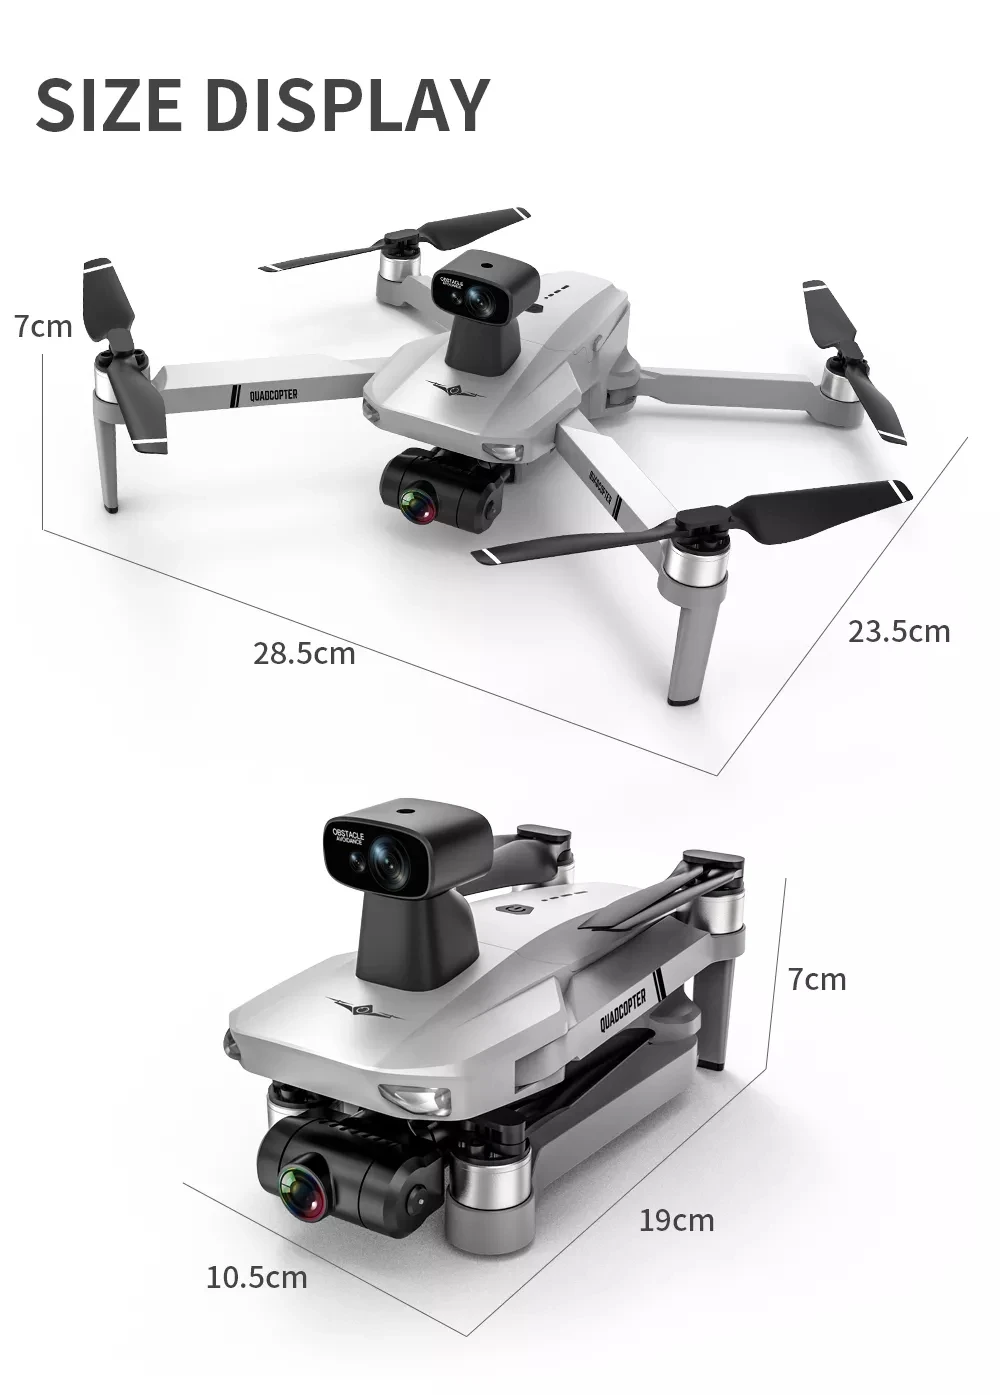 KF102 MAX Drone, SIZE DISPLAY 7cm quadcopter 23.Scm 28.5